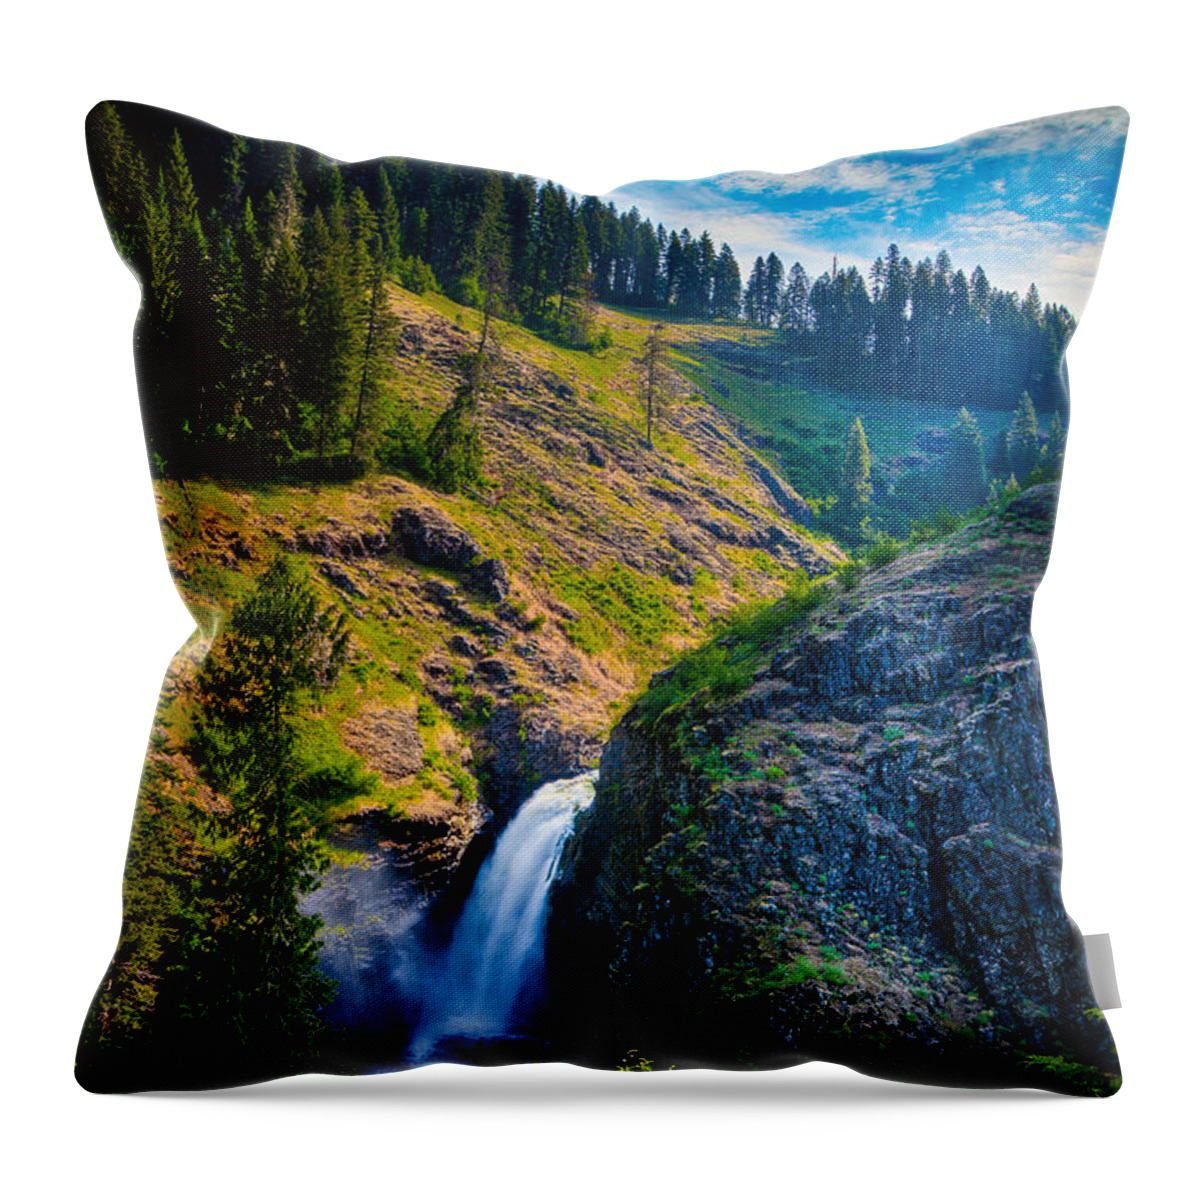  Throw Pillow featuring the photograph Lower Falls - Elk Creek Falls by Rikk Flohr